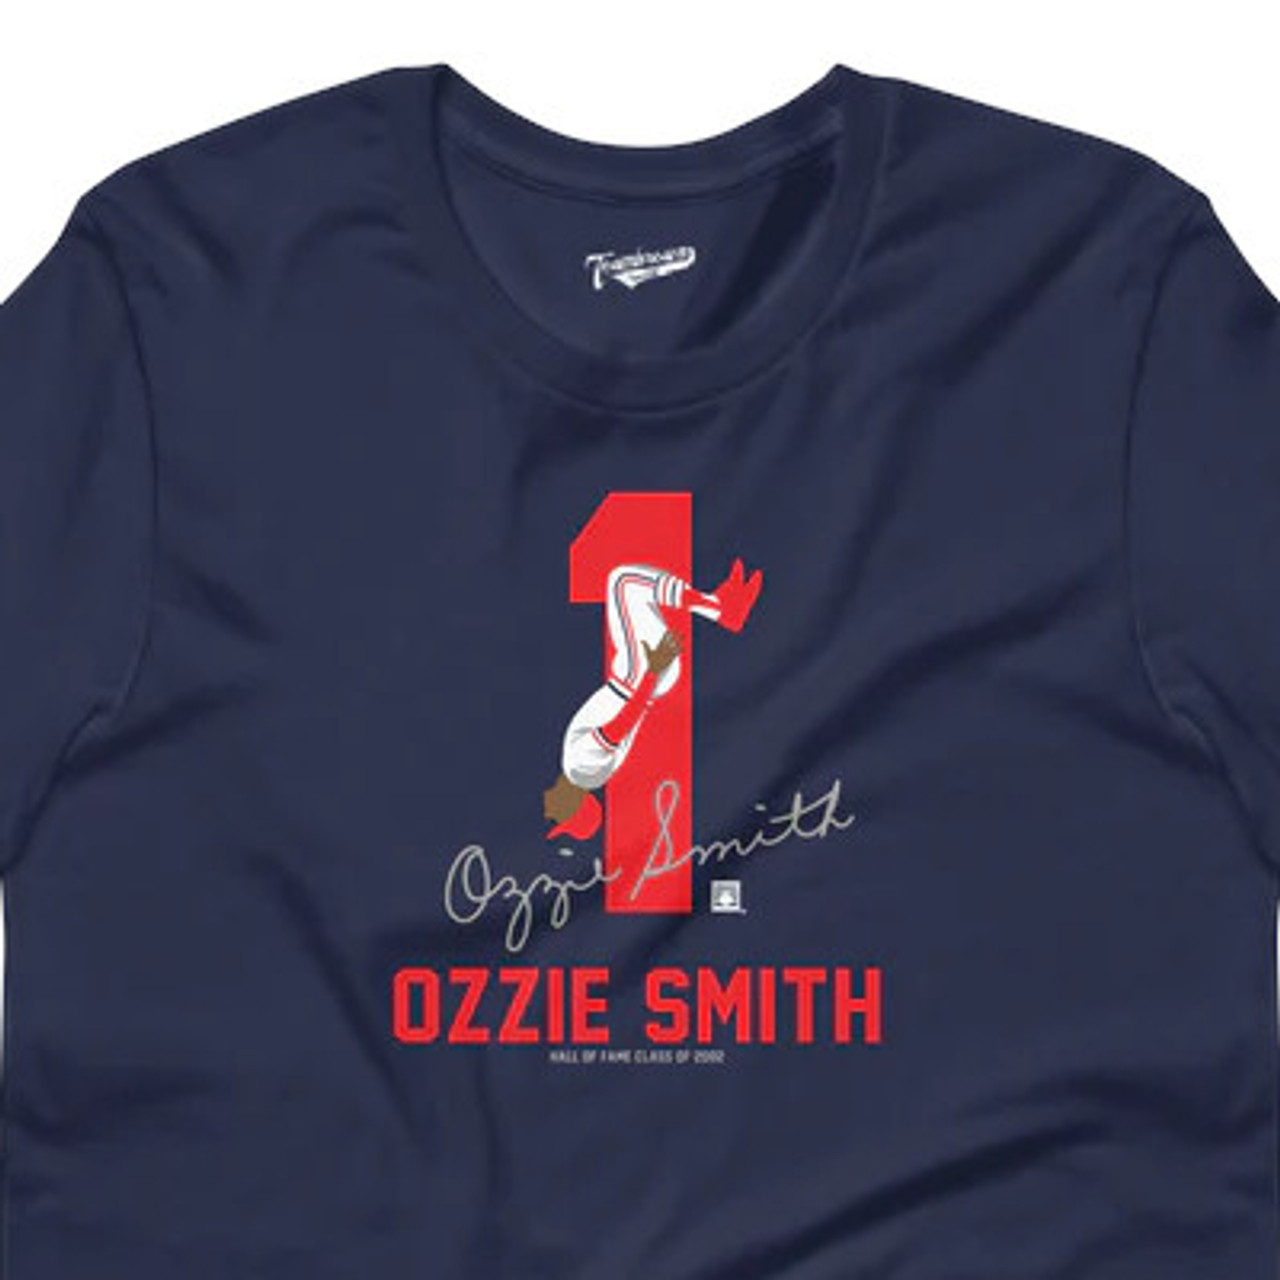 Ozzie Smith Men's Cotton T-shirt St. Louis Baseball 